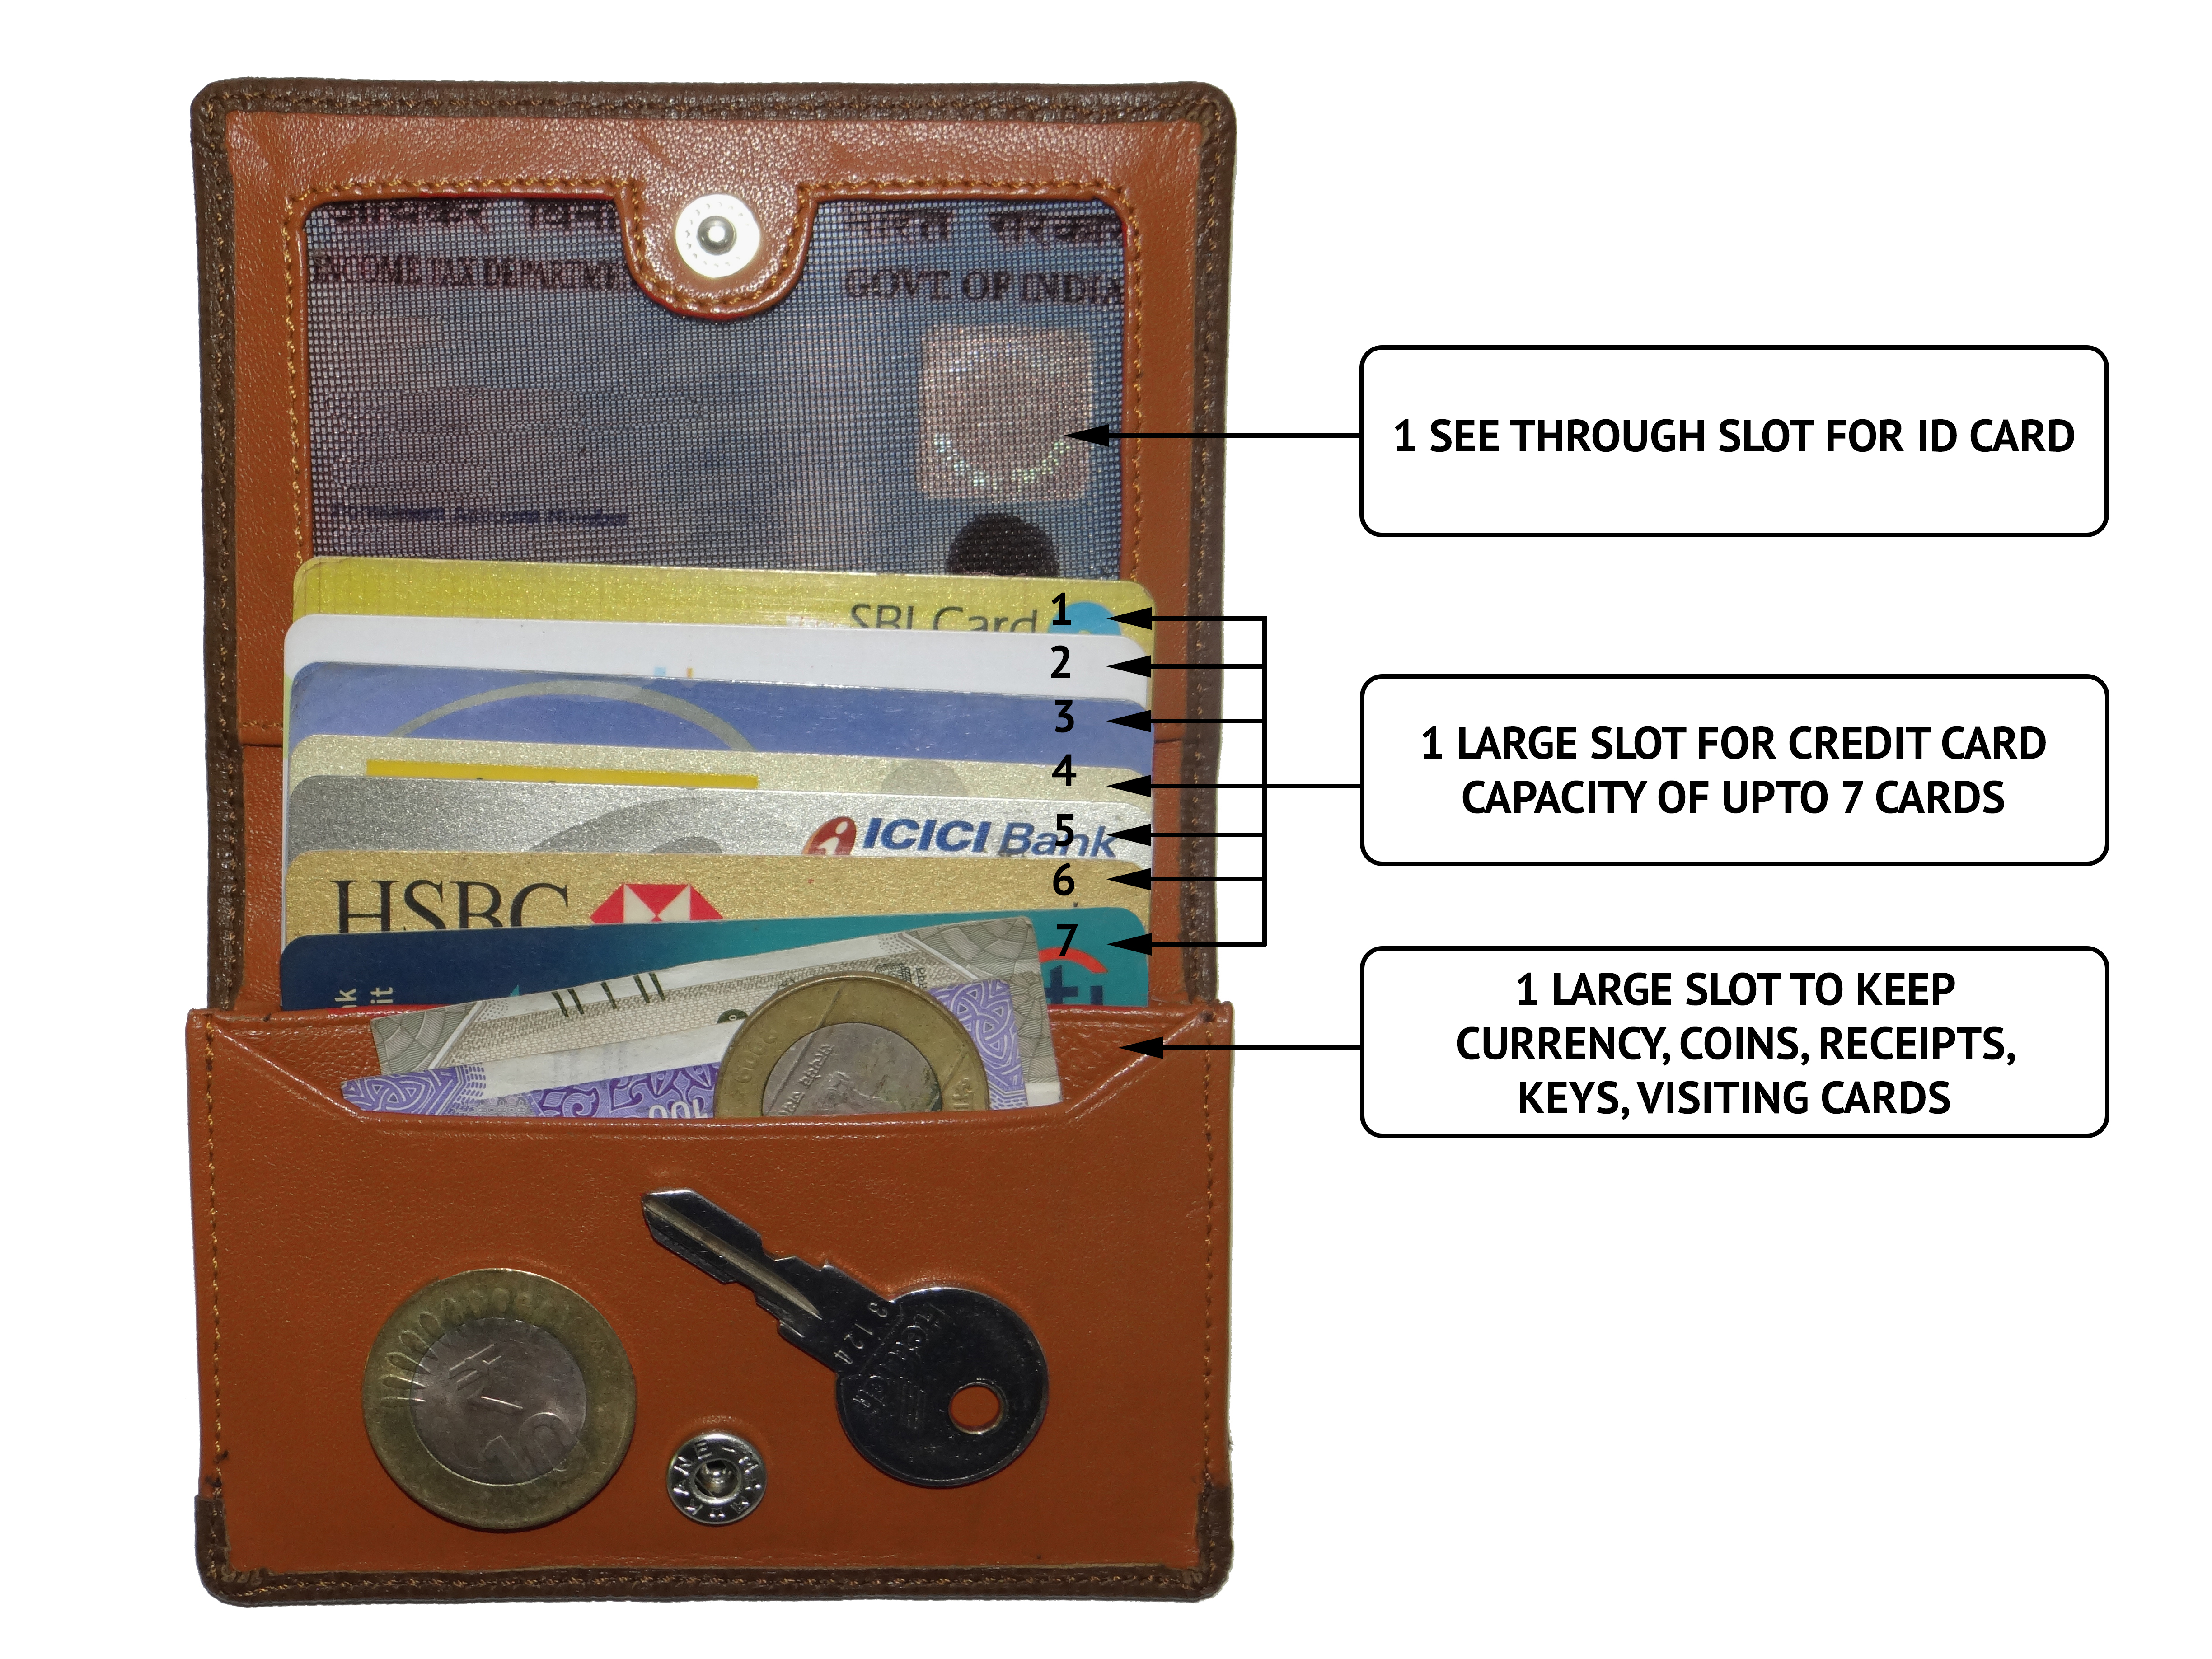 Card Case--Credit card cum business card case in Genuine Leather - Brown